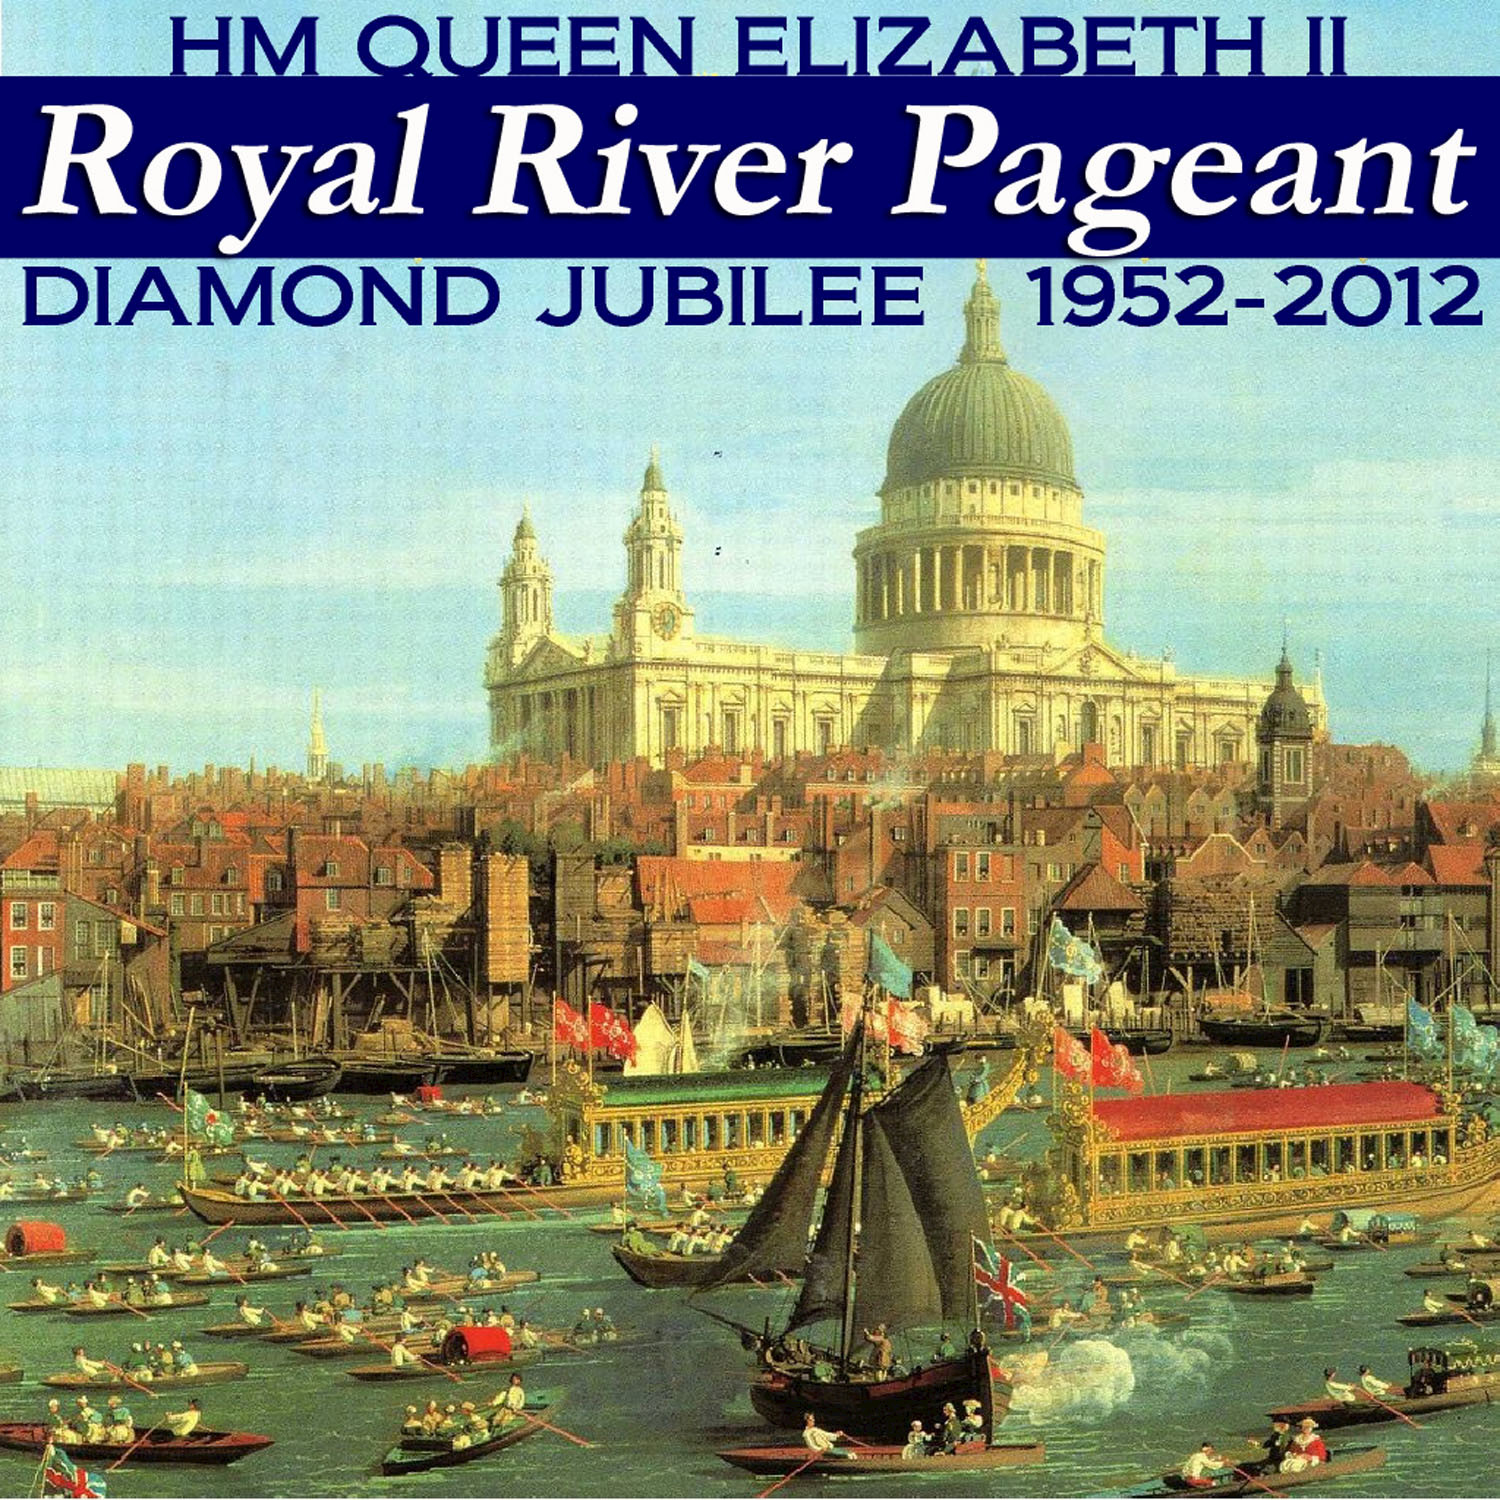 Hm Queen Elizabeth Ll - Royal River Pageant - Diamond Jubilee 1952-2012